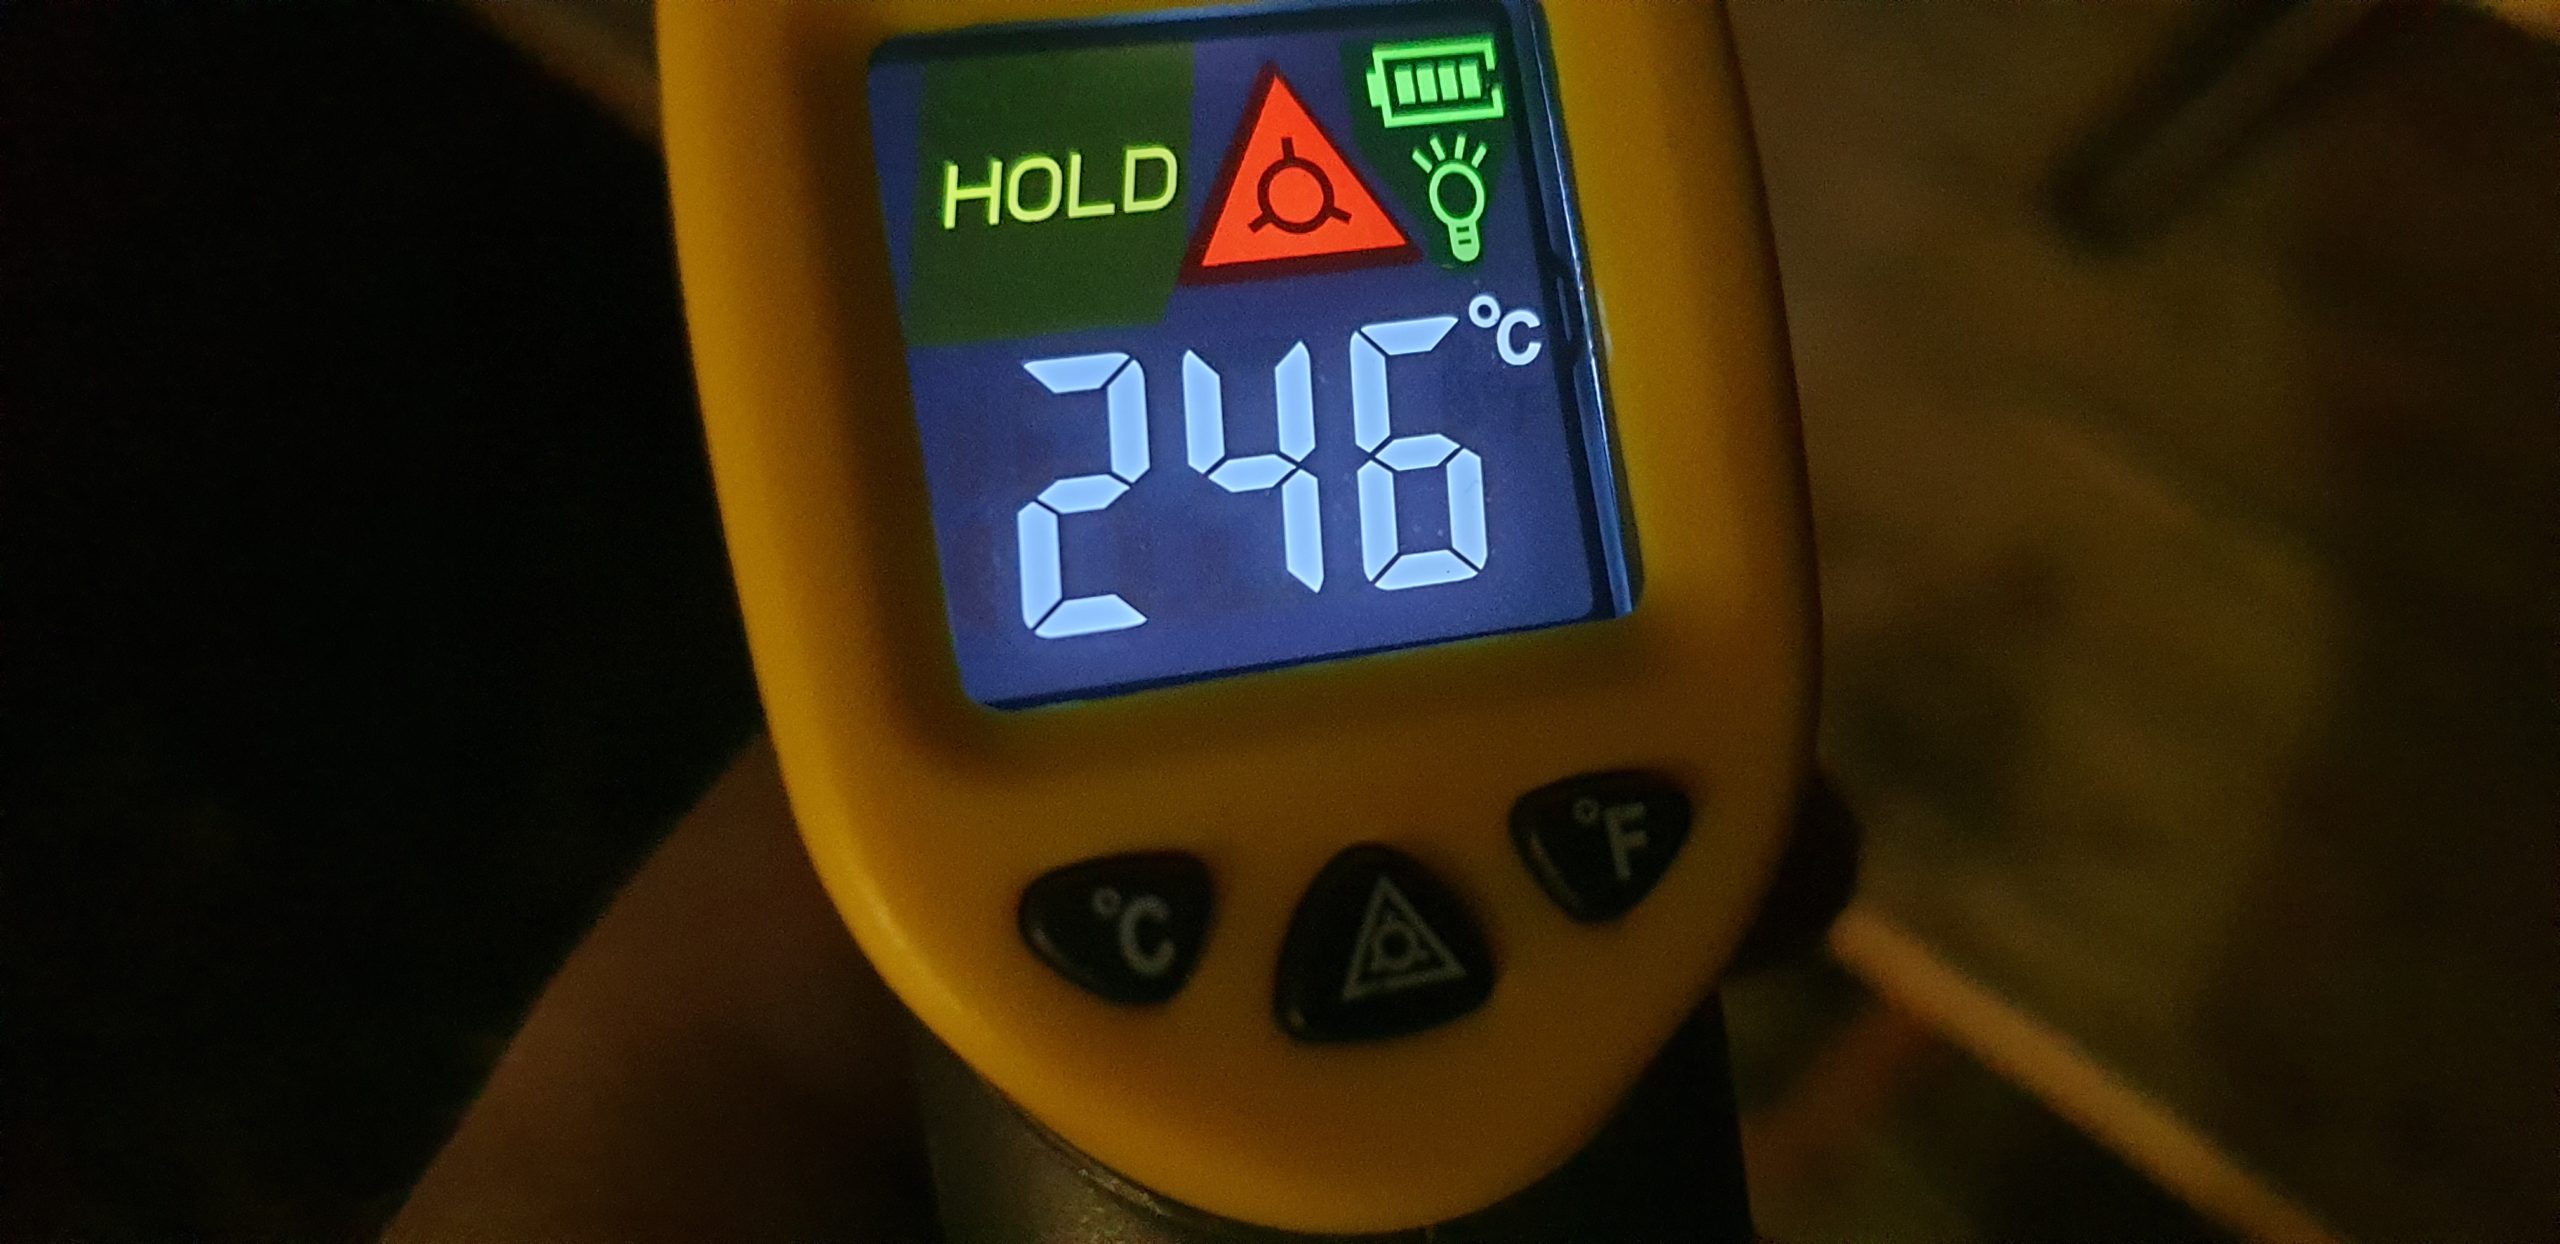 Digital infared thermometer display reading 246ºC.